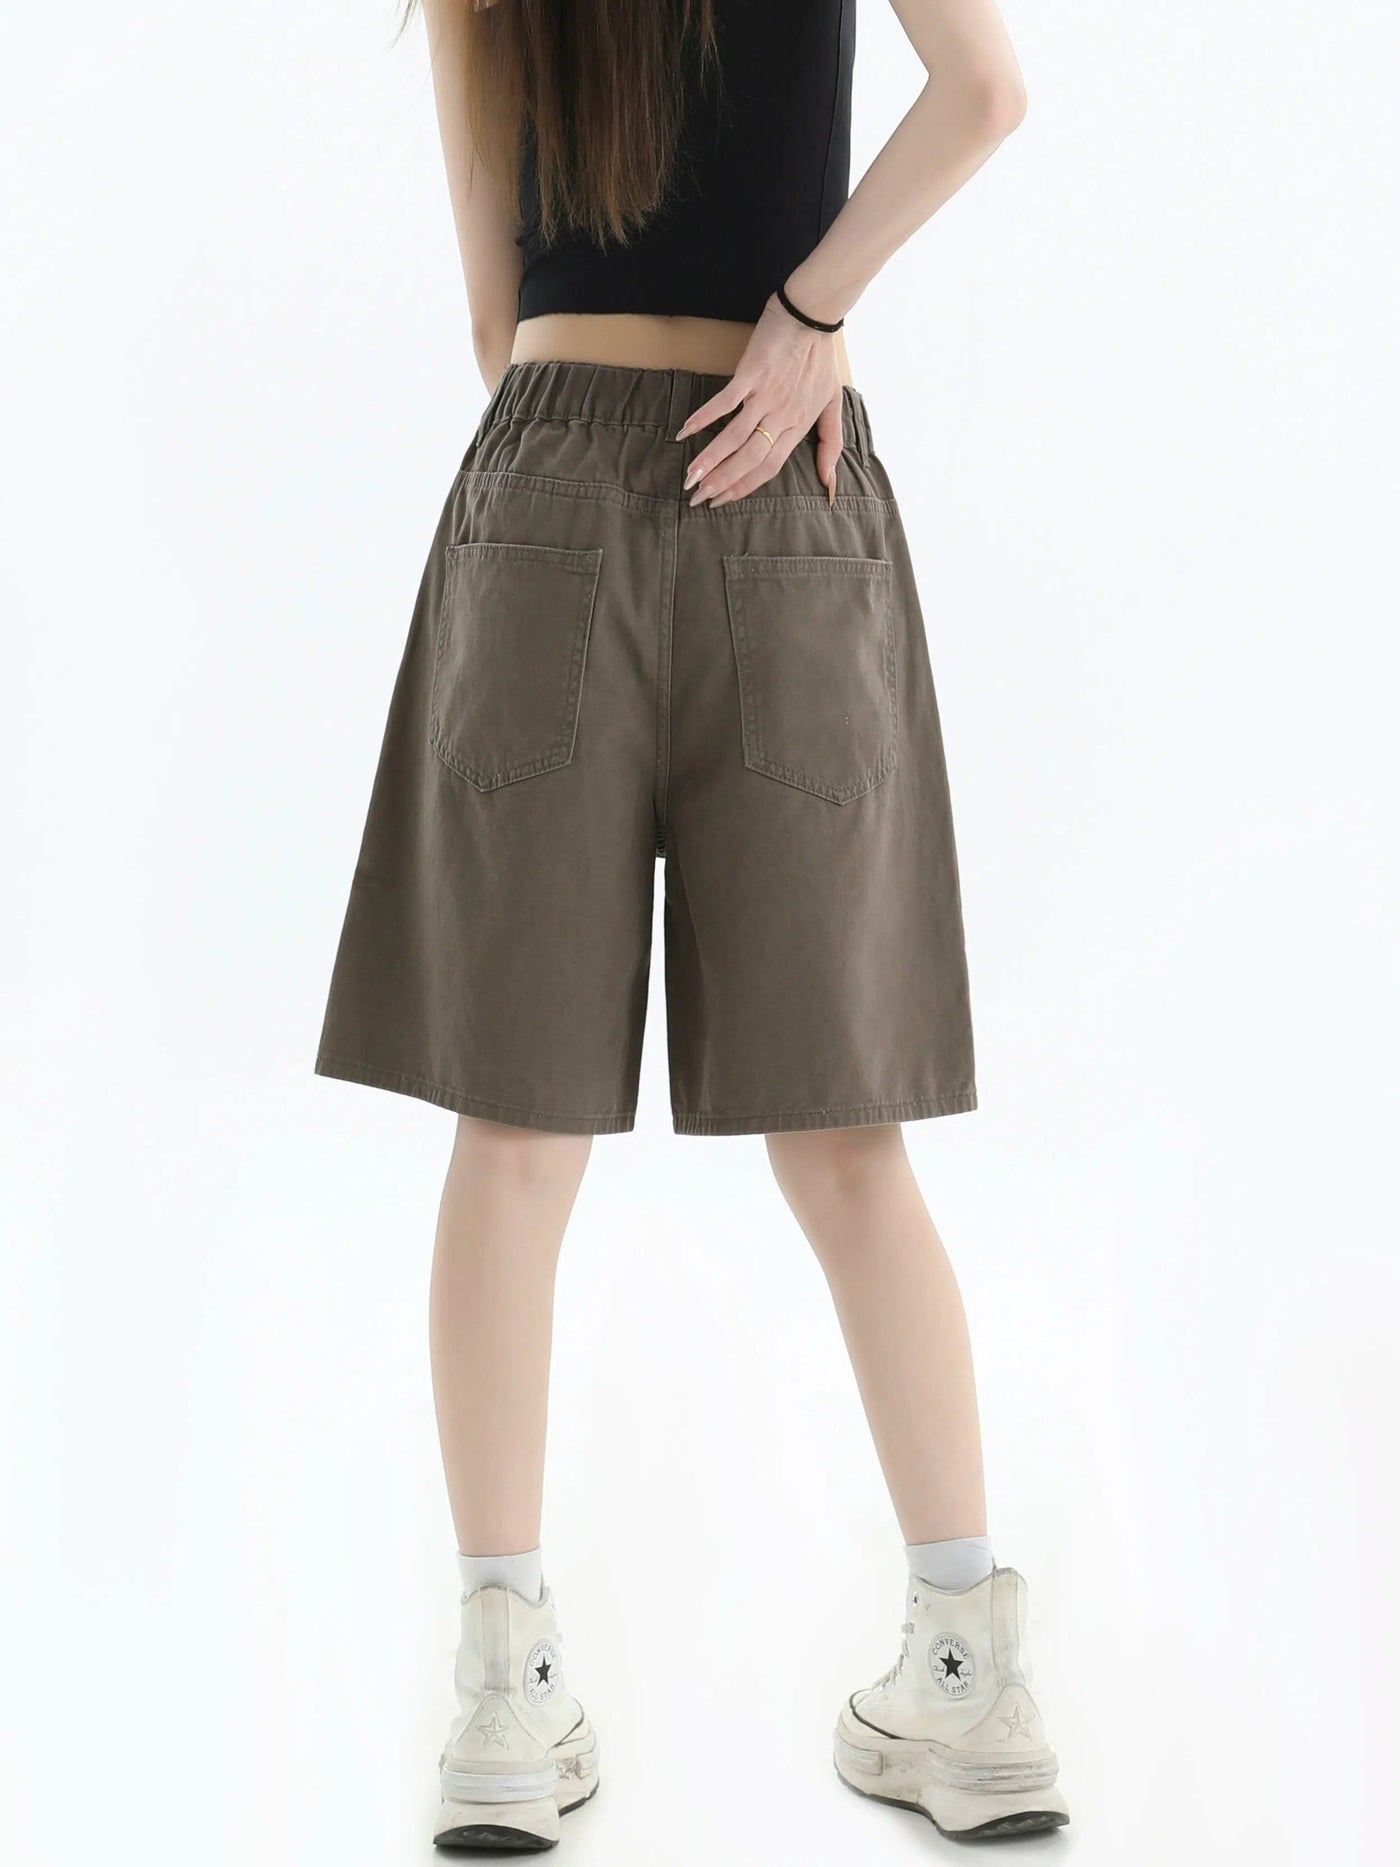 Neat Knee Denim Shorts Korean Street Fashion Shorts By INS Korea Shop Online at OH Vault